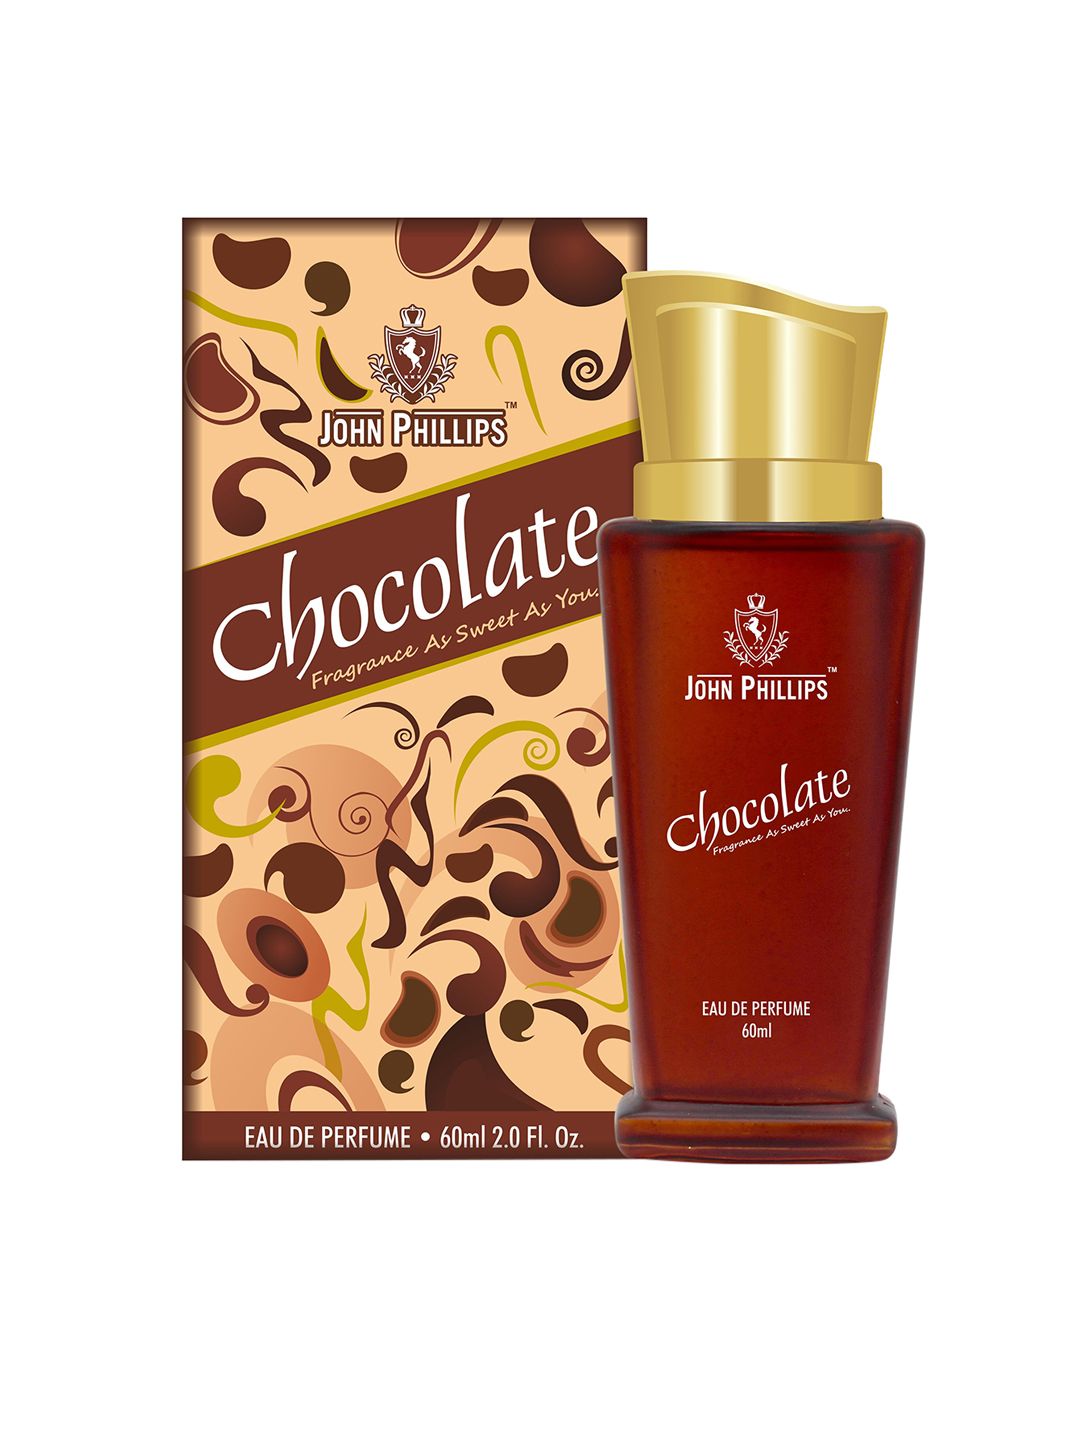 JOHN PHILLIPS Chocolate Eau De Perfume - 60ml Price in India